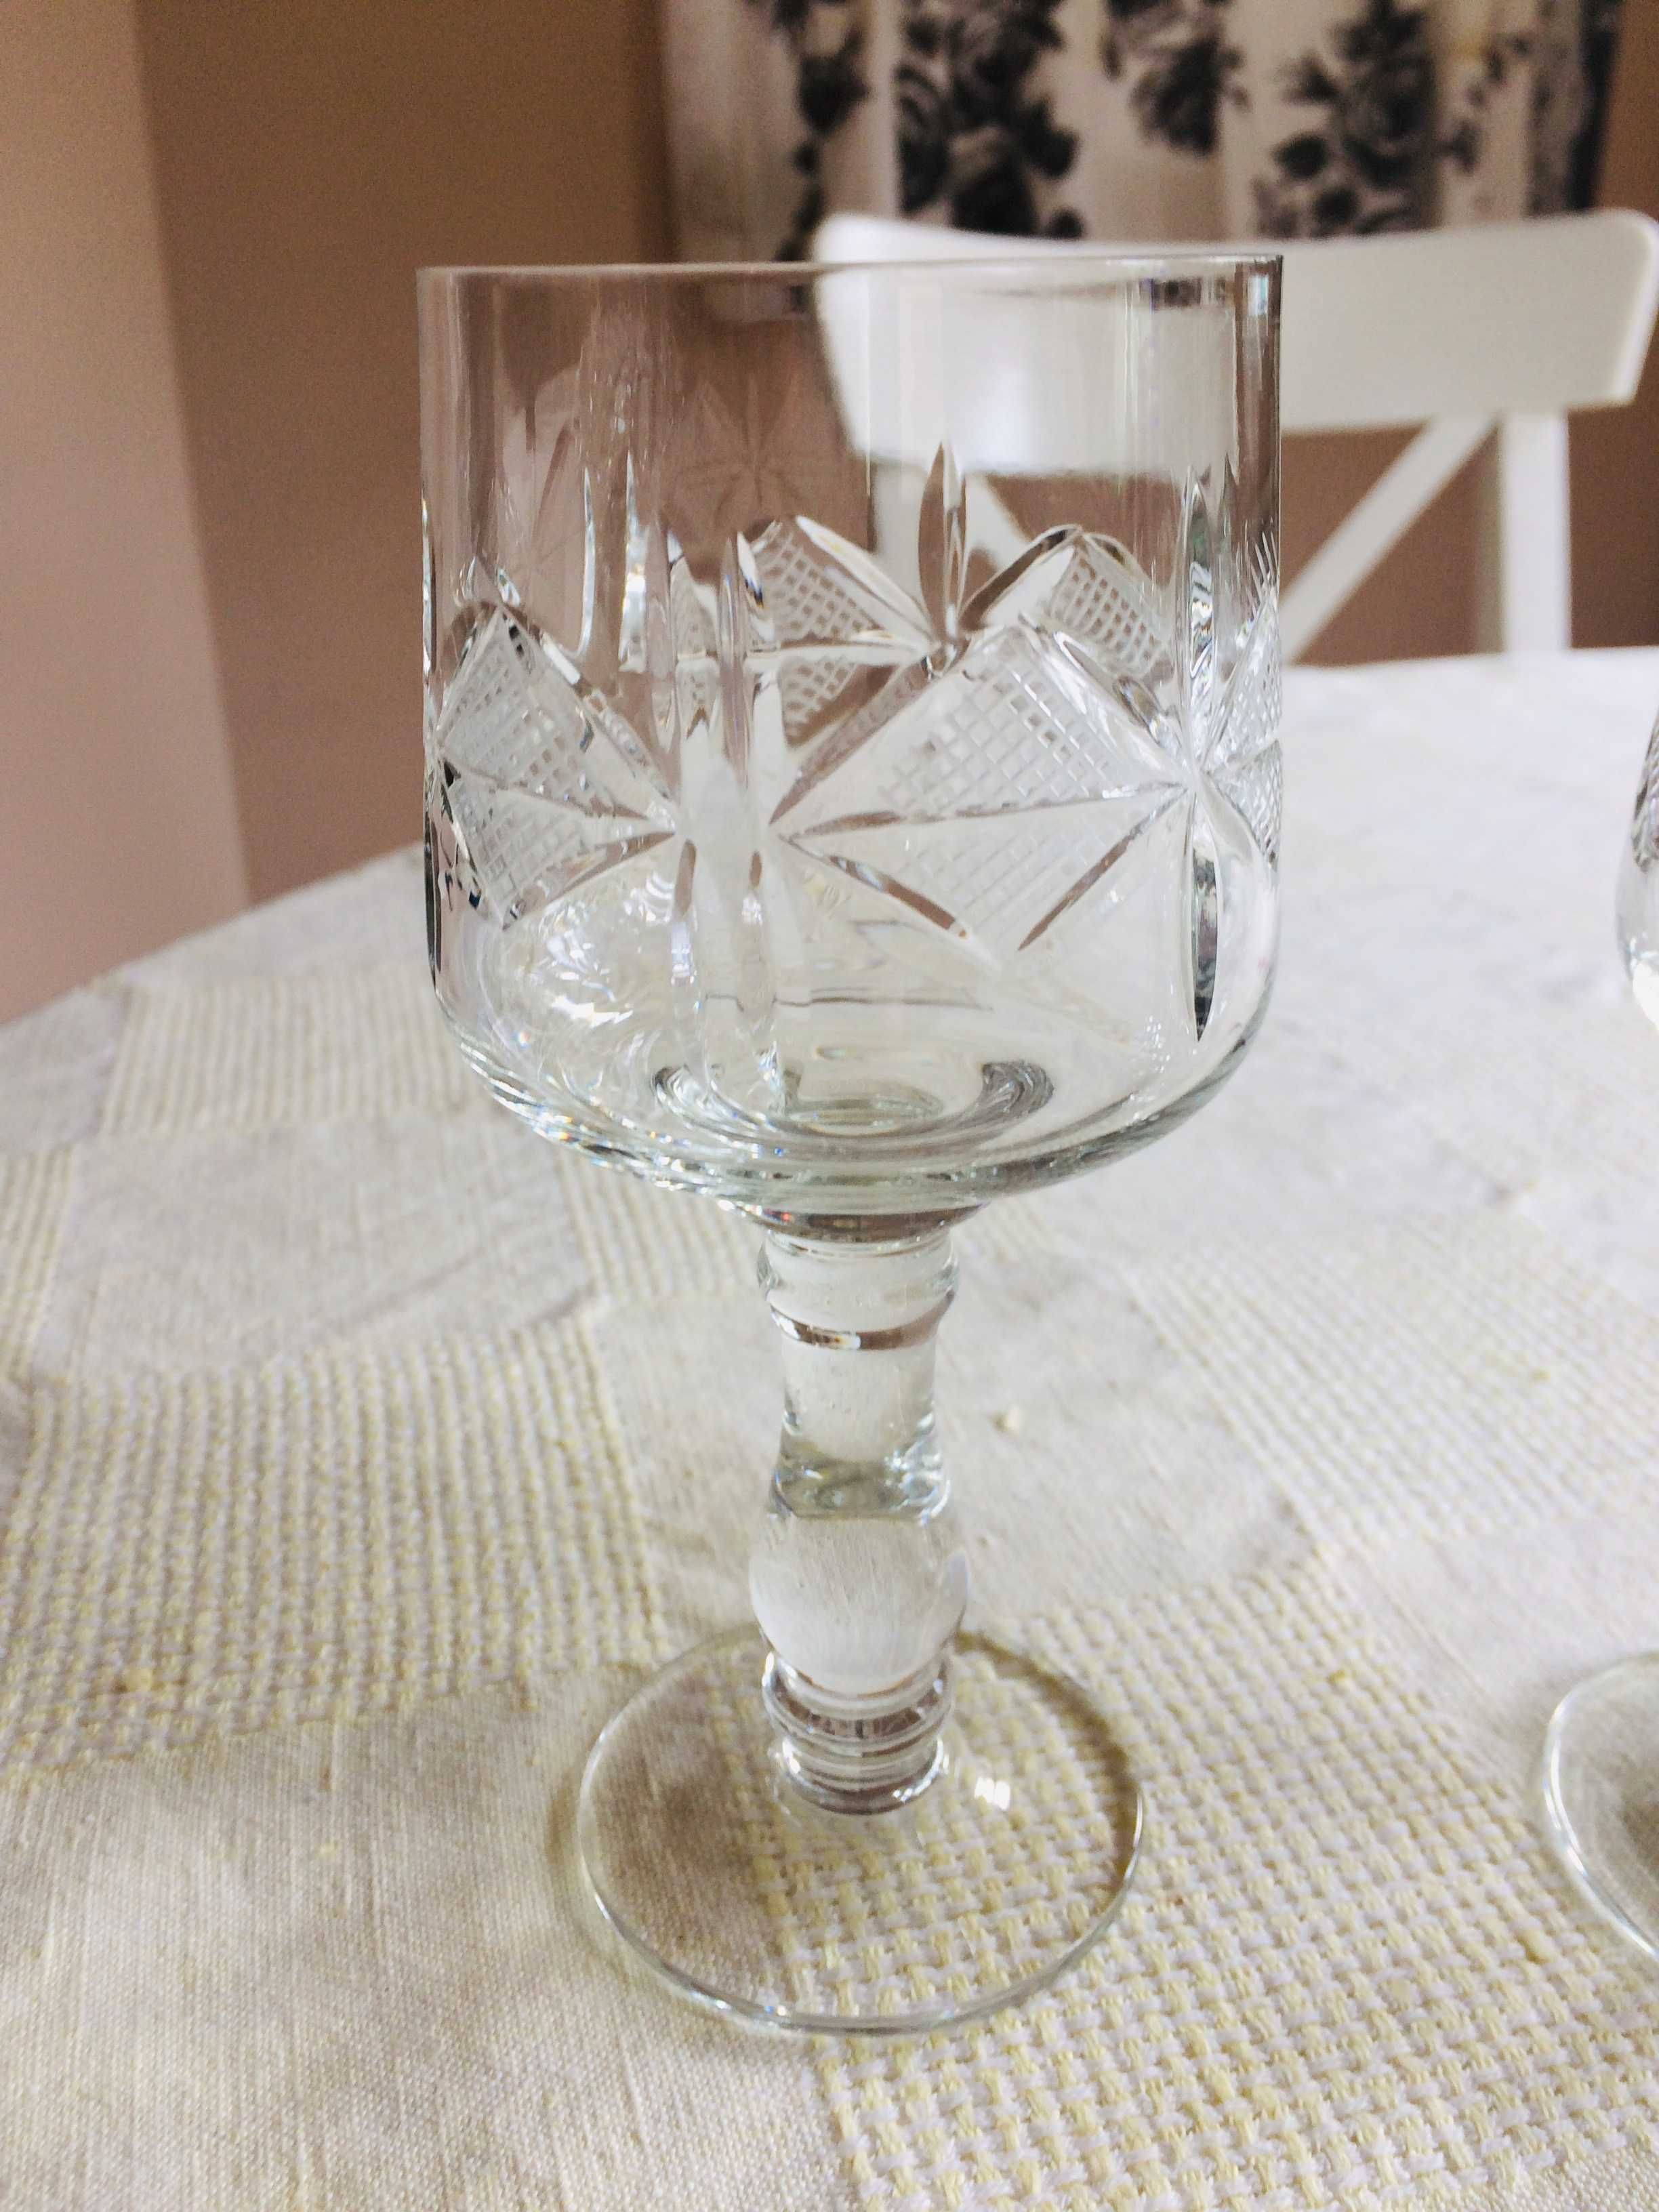 Кристални български чаши от соц време